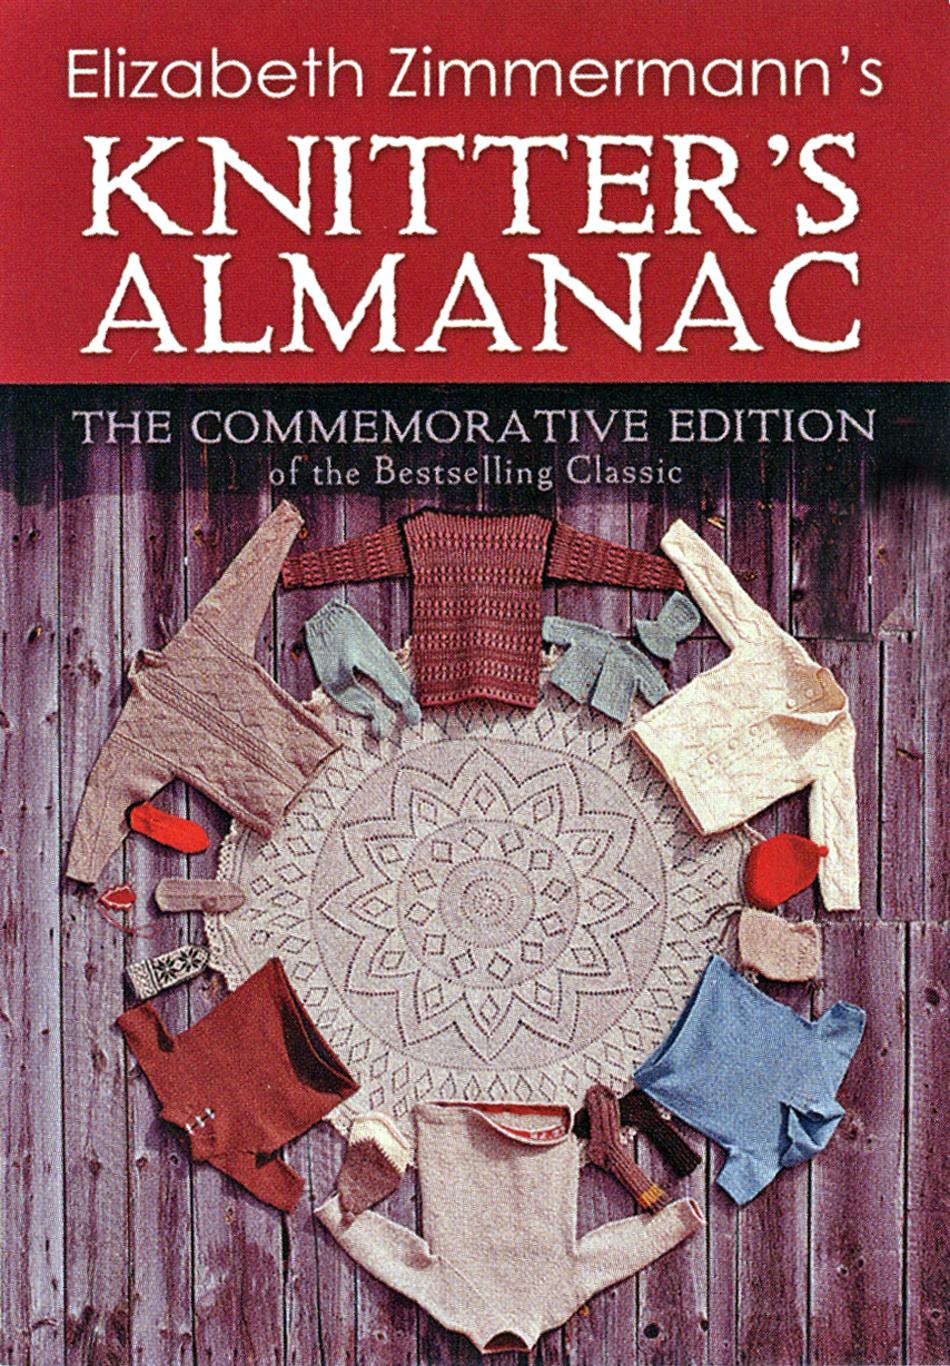 Knitting Books Elizabeth Zimmermannaposs Knitteraposs Almanac  Commemorative Edition